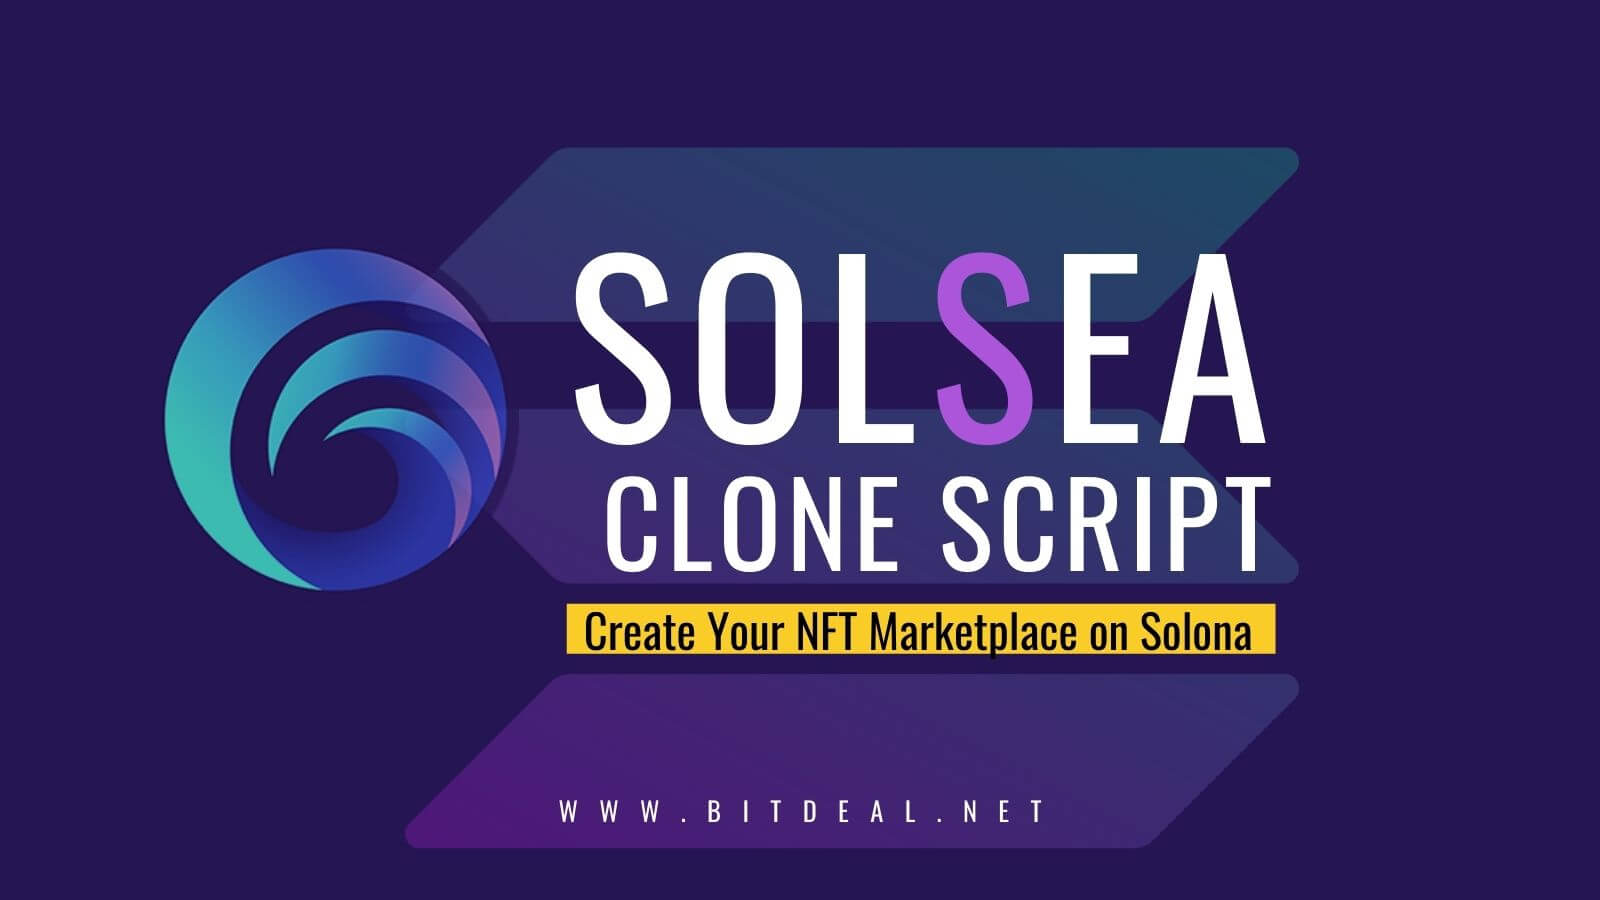 Solsea Clone Script to Build a NFT Marketplace like Solsea